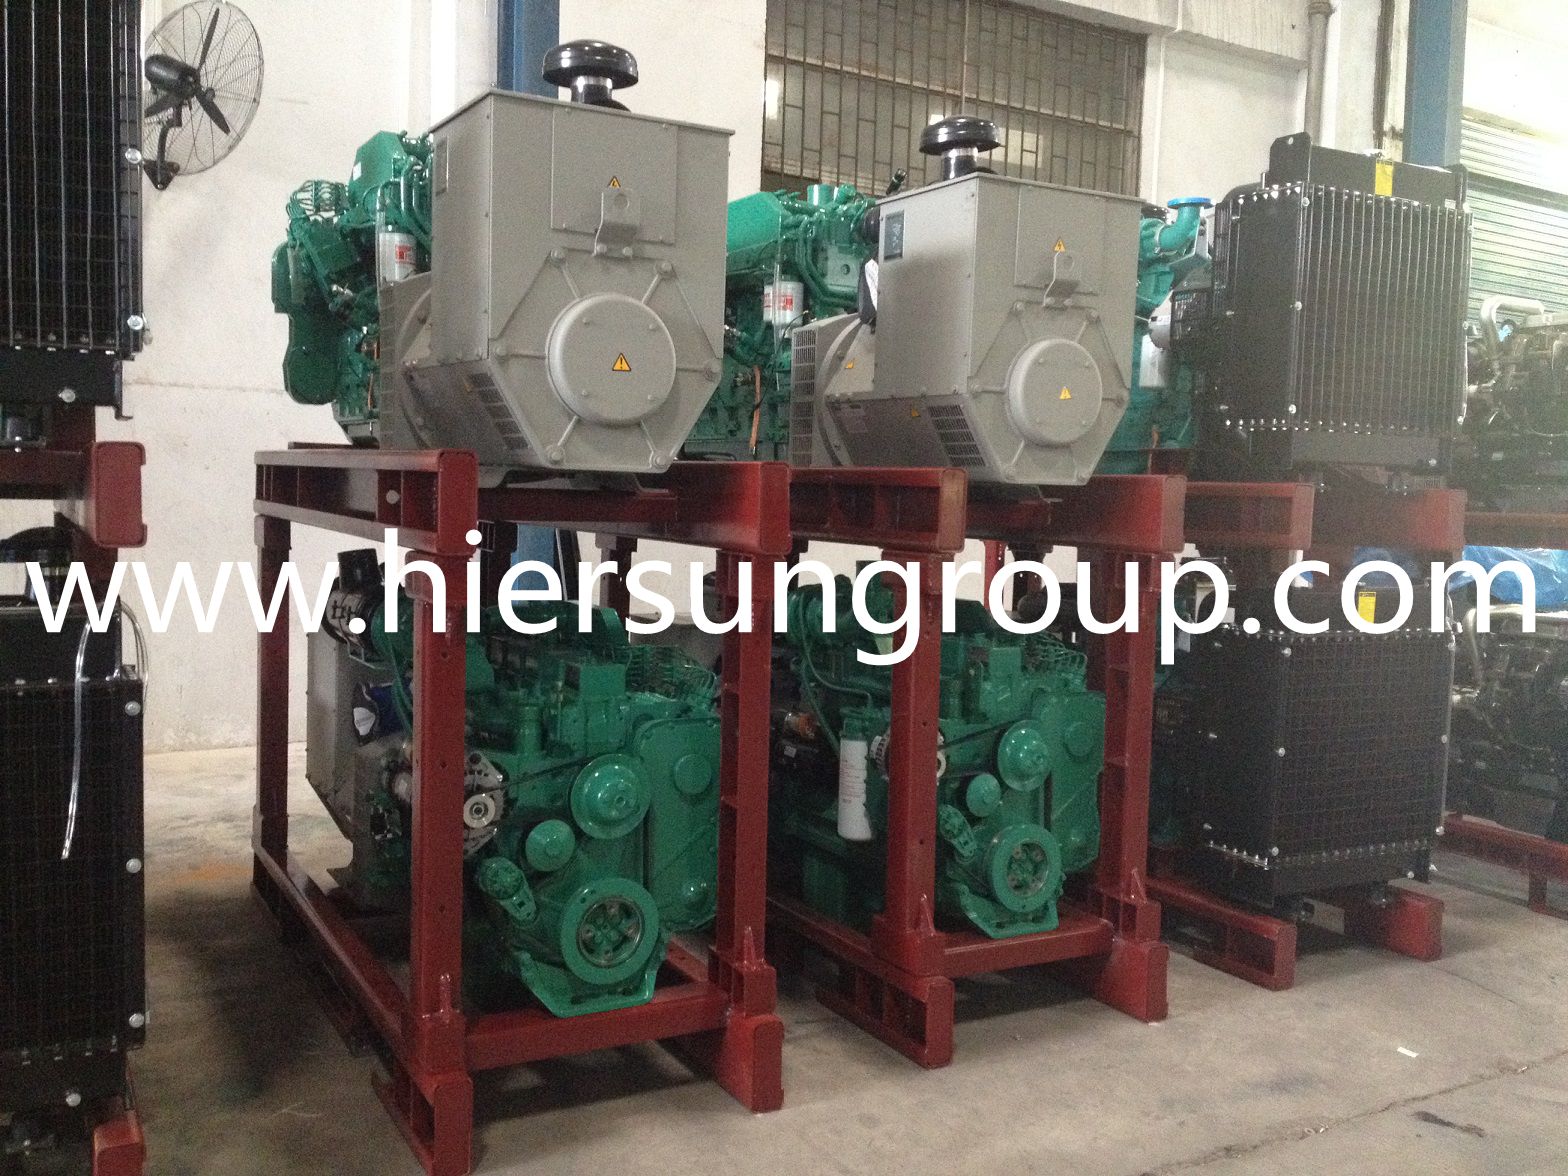 CKD Engines, alternators, base frame and Control Panels Unit Shipped to Nigeria